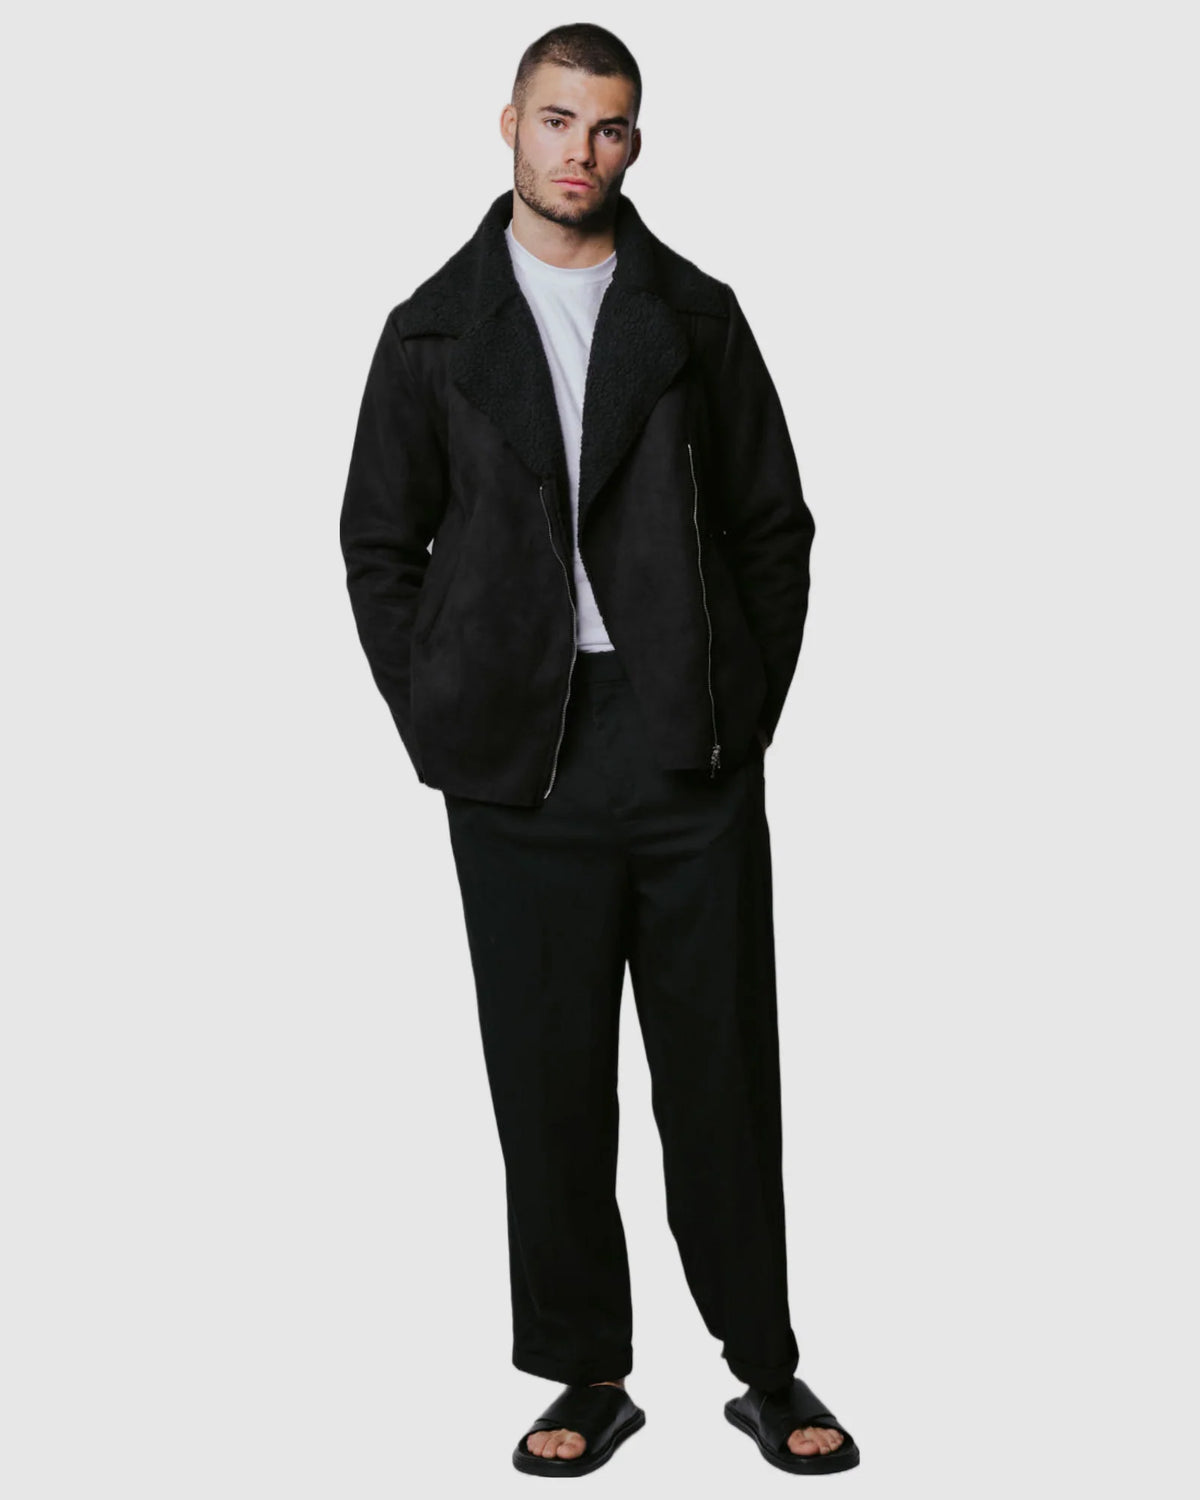 Justin Cassin Hawkins Sherpa Jacket in Black Color 4